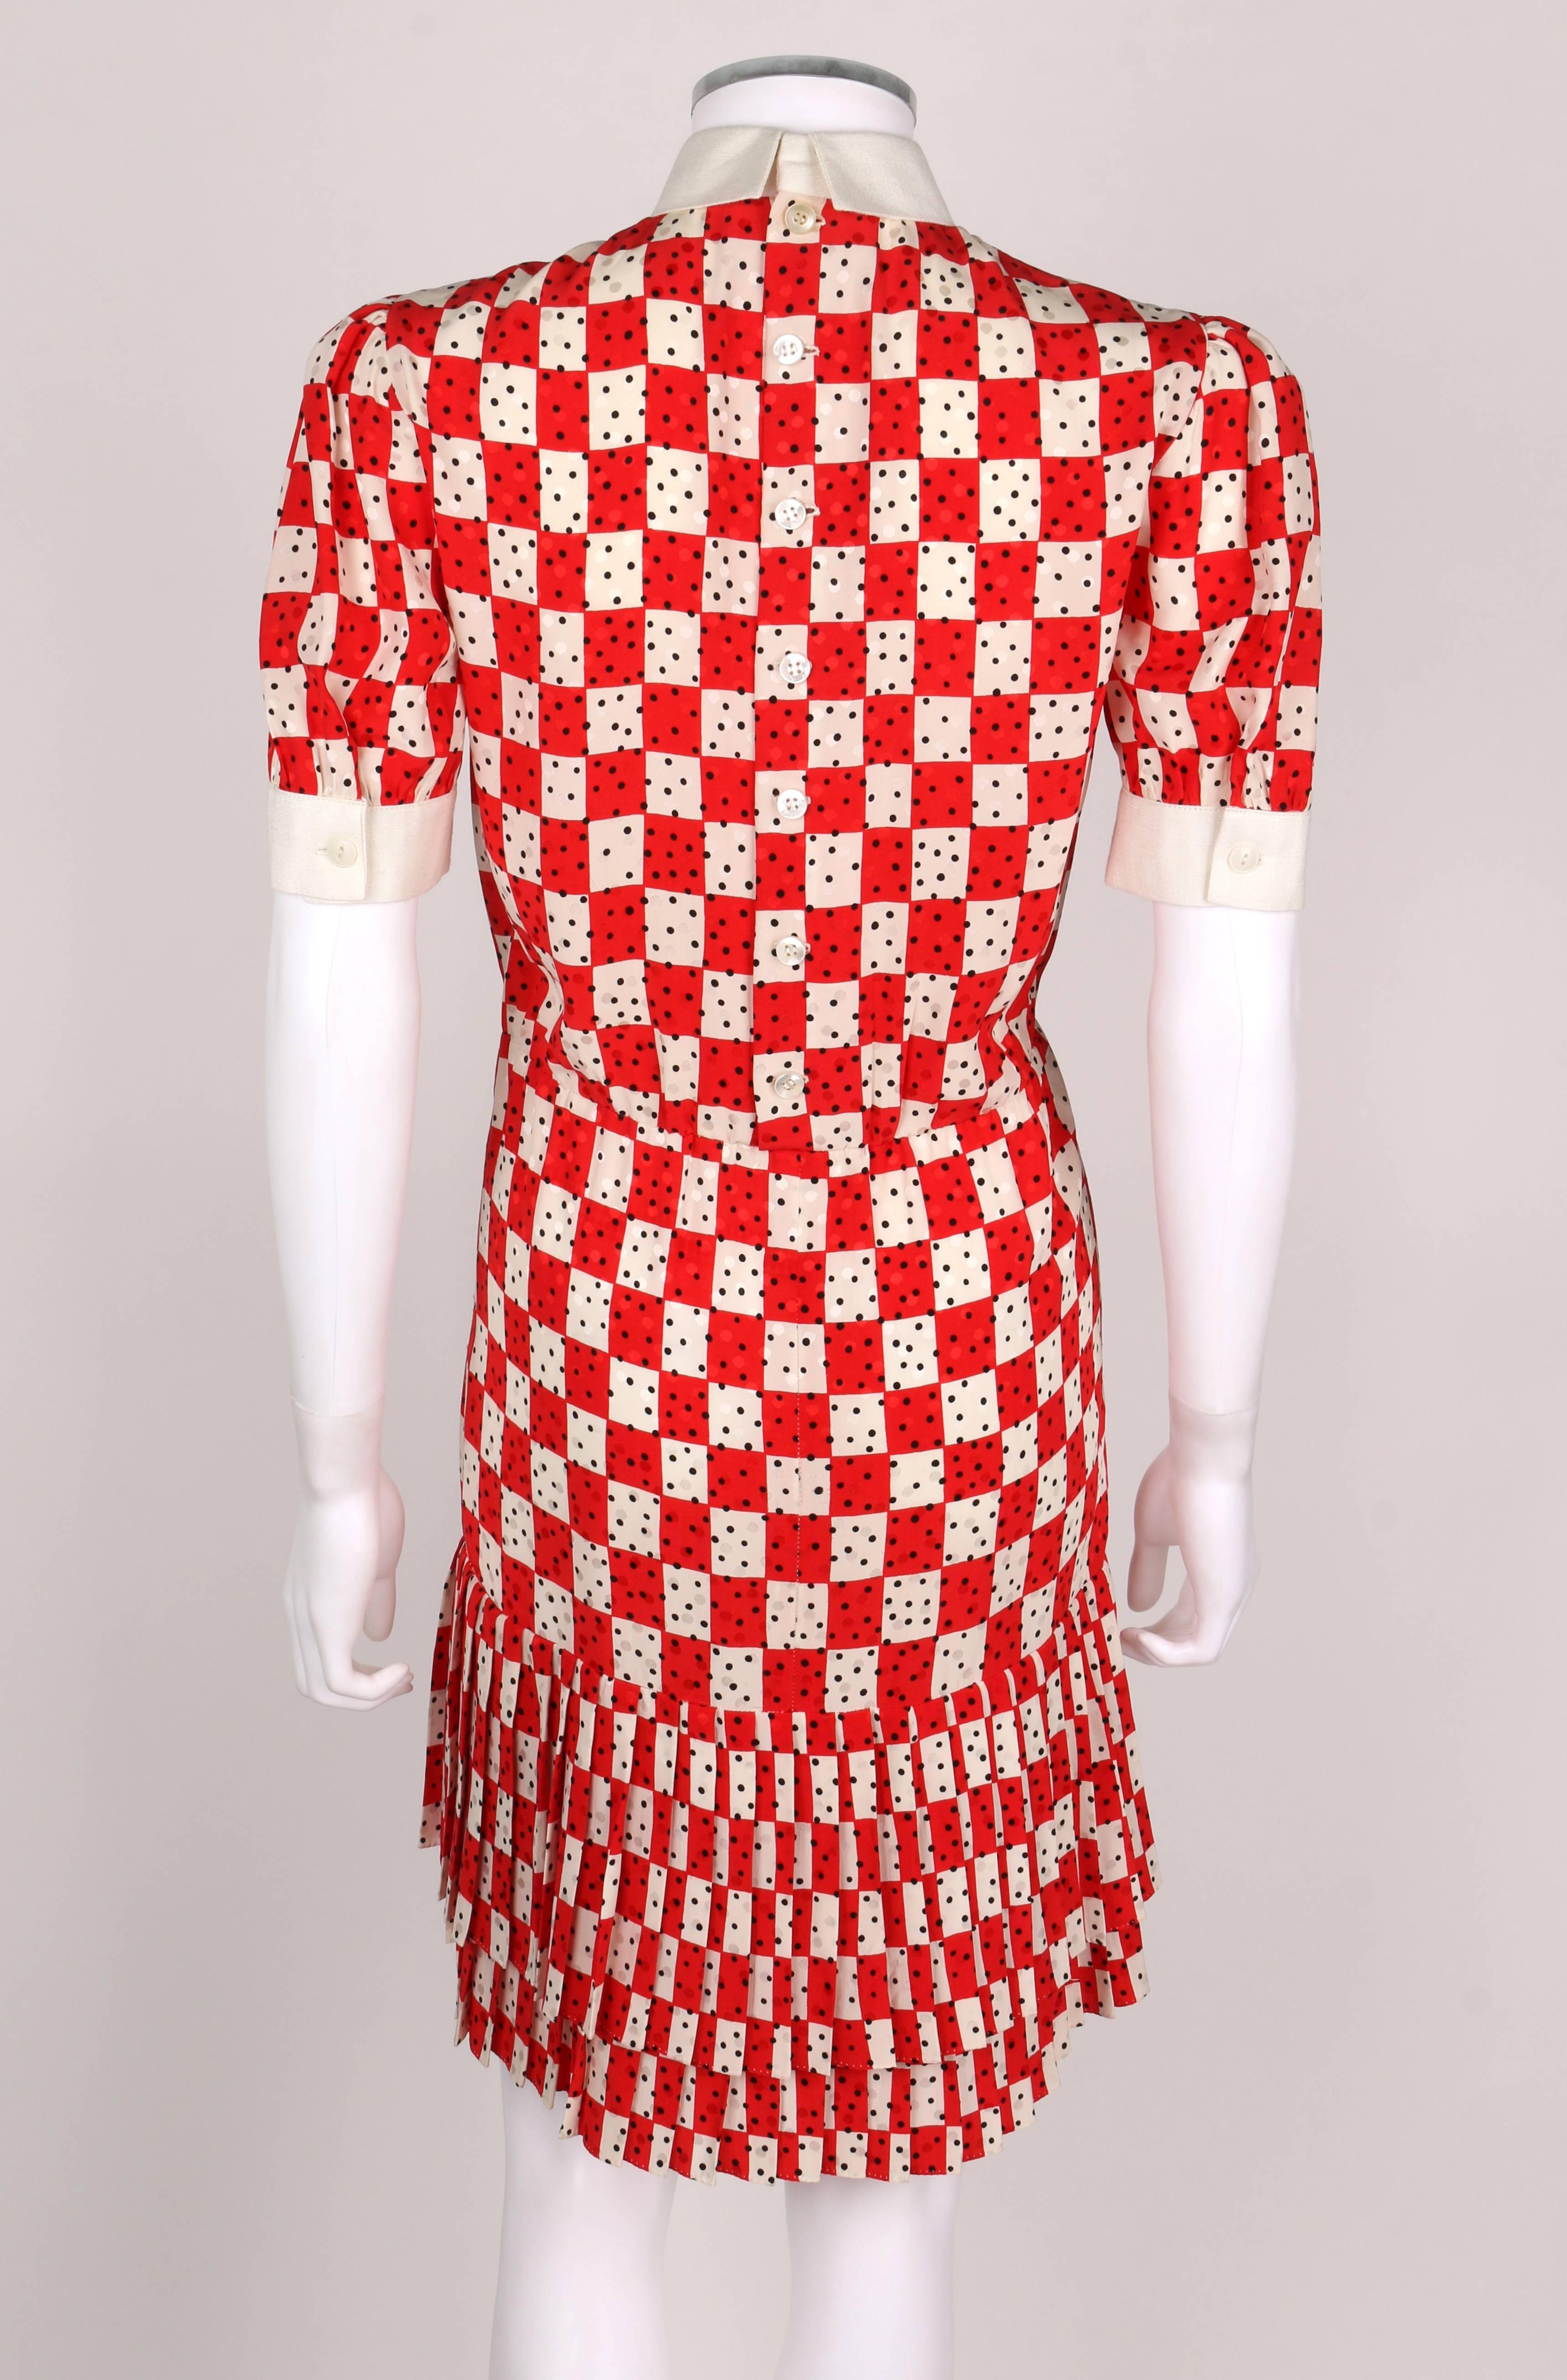 Women's BILL BLASS c.1980's Red White Checkboard Polka Dot Print Silk Shirtwaist Dress